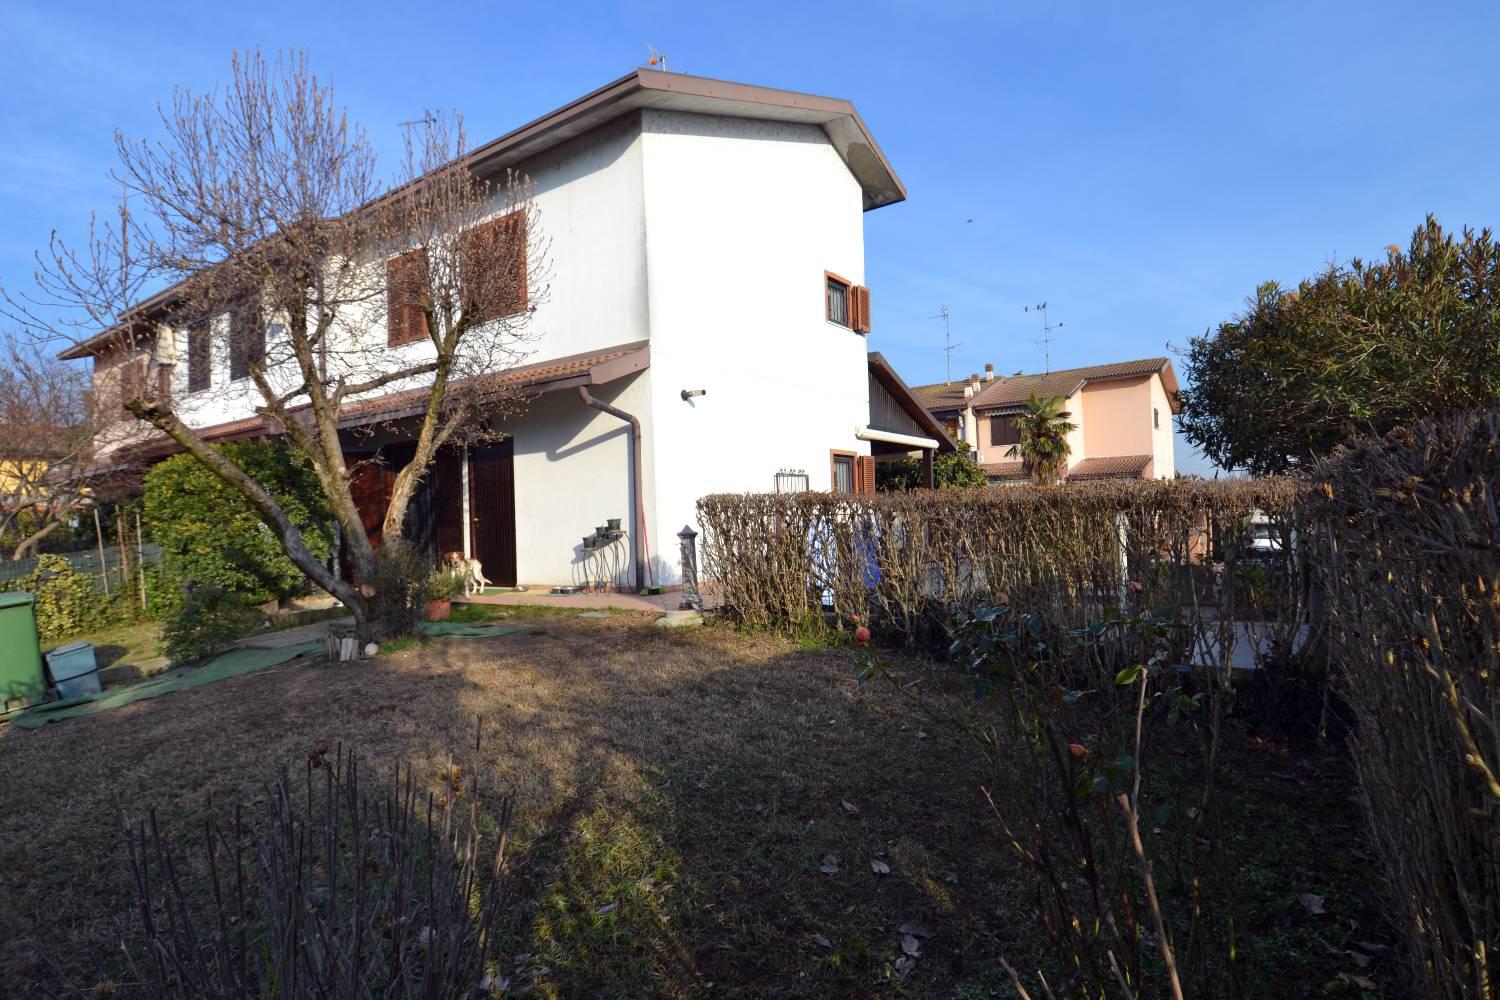 Foto 1 di 20 - Villa a schiera in vendita a Pieve Fissiraga